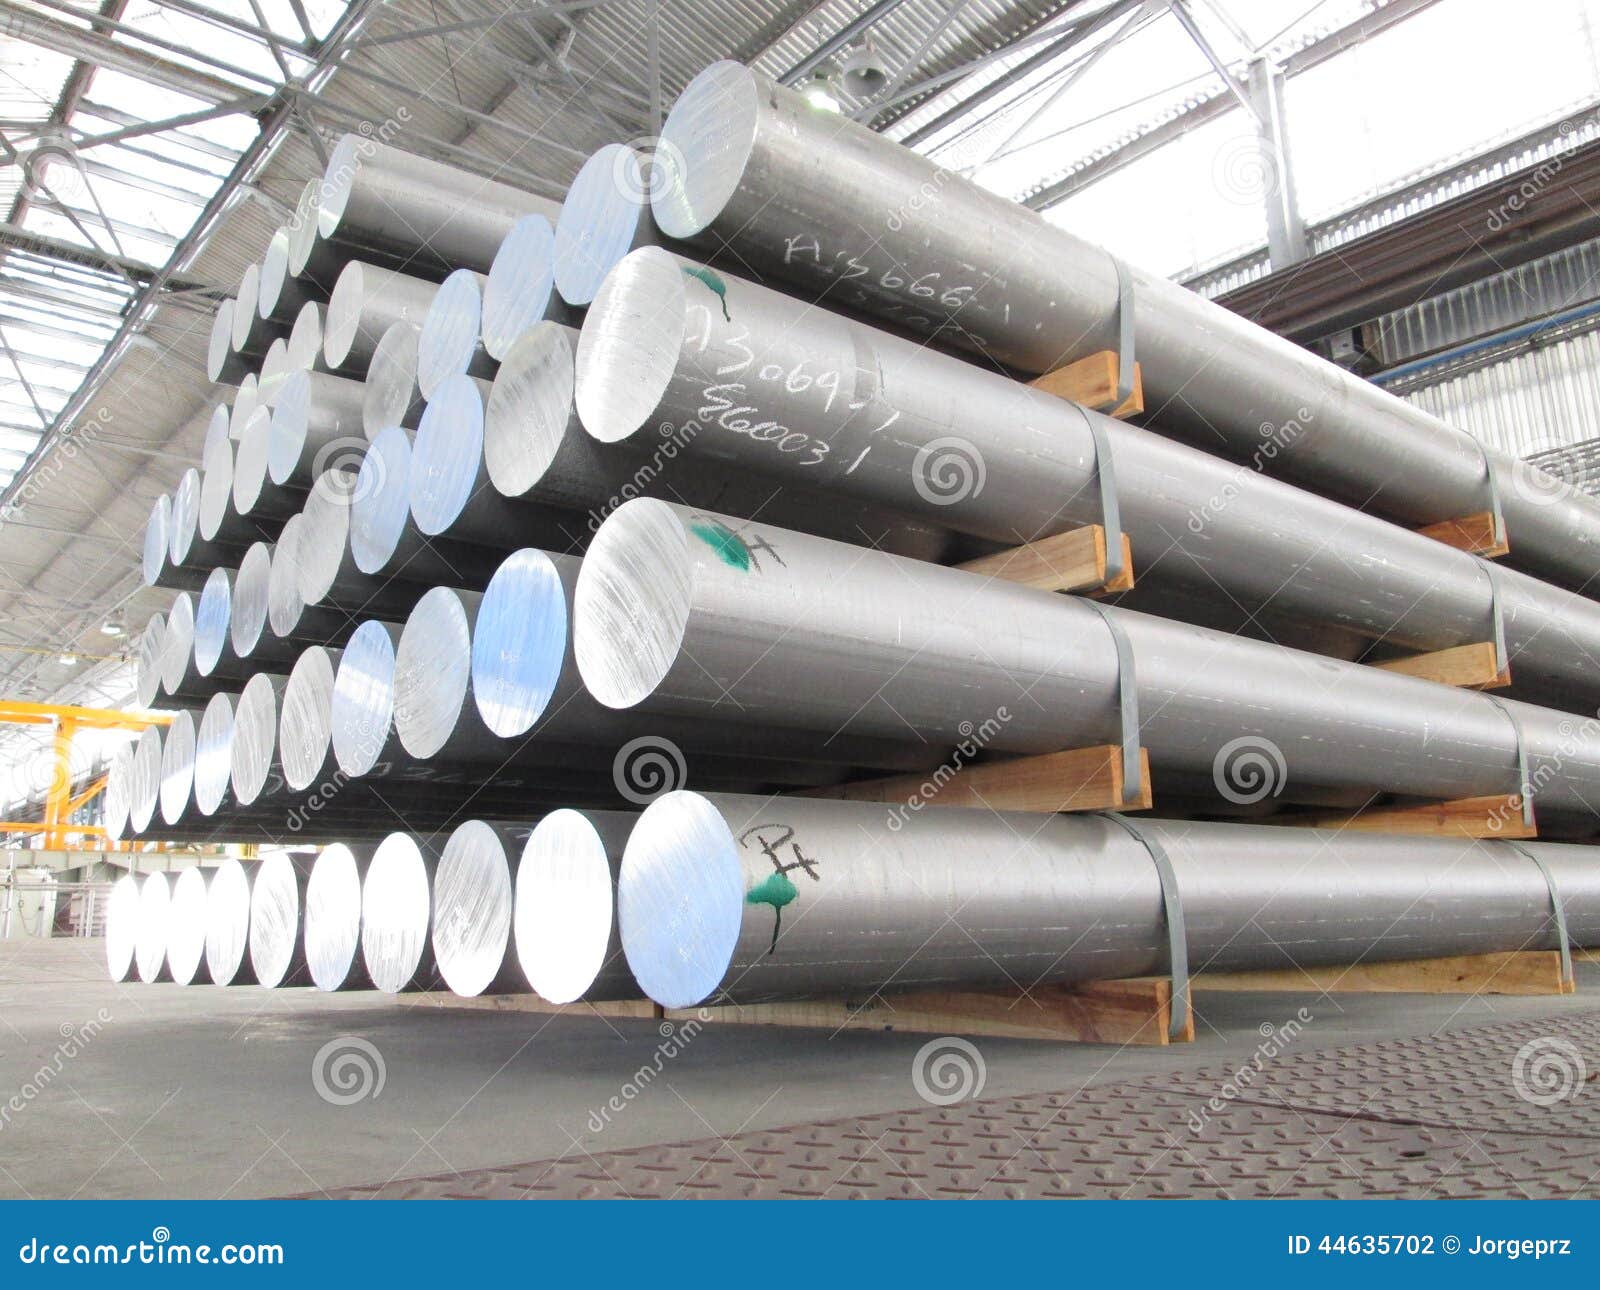 aluminum cylinders